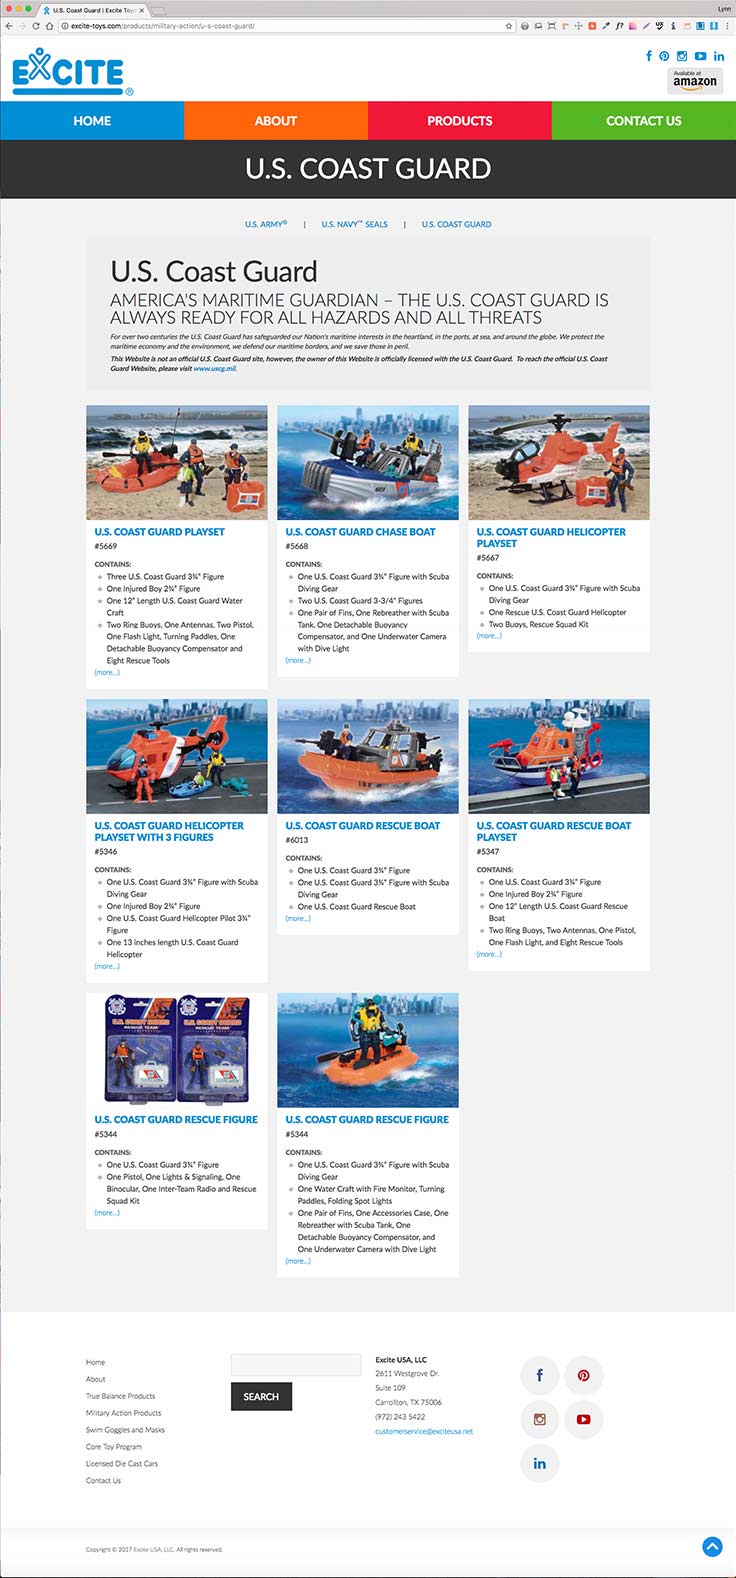 Excite-Toys website screenshots